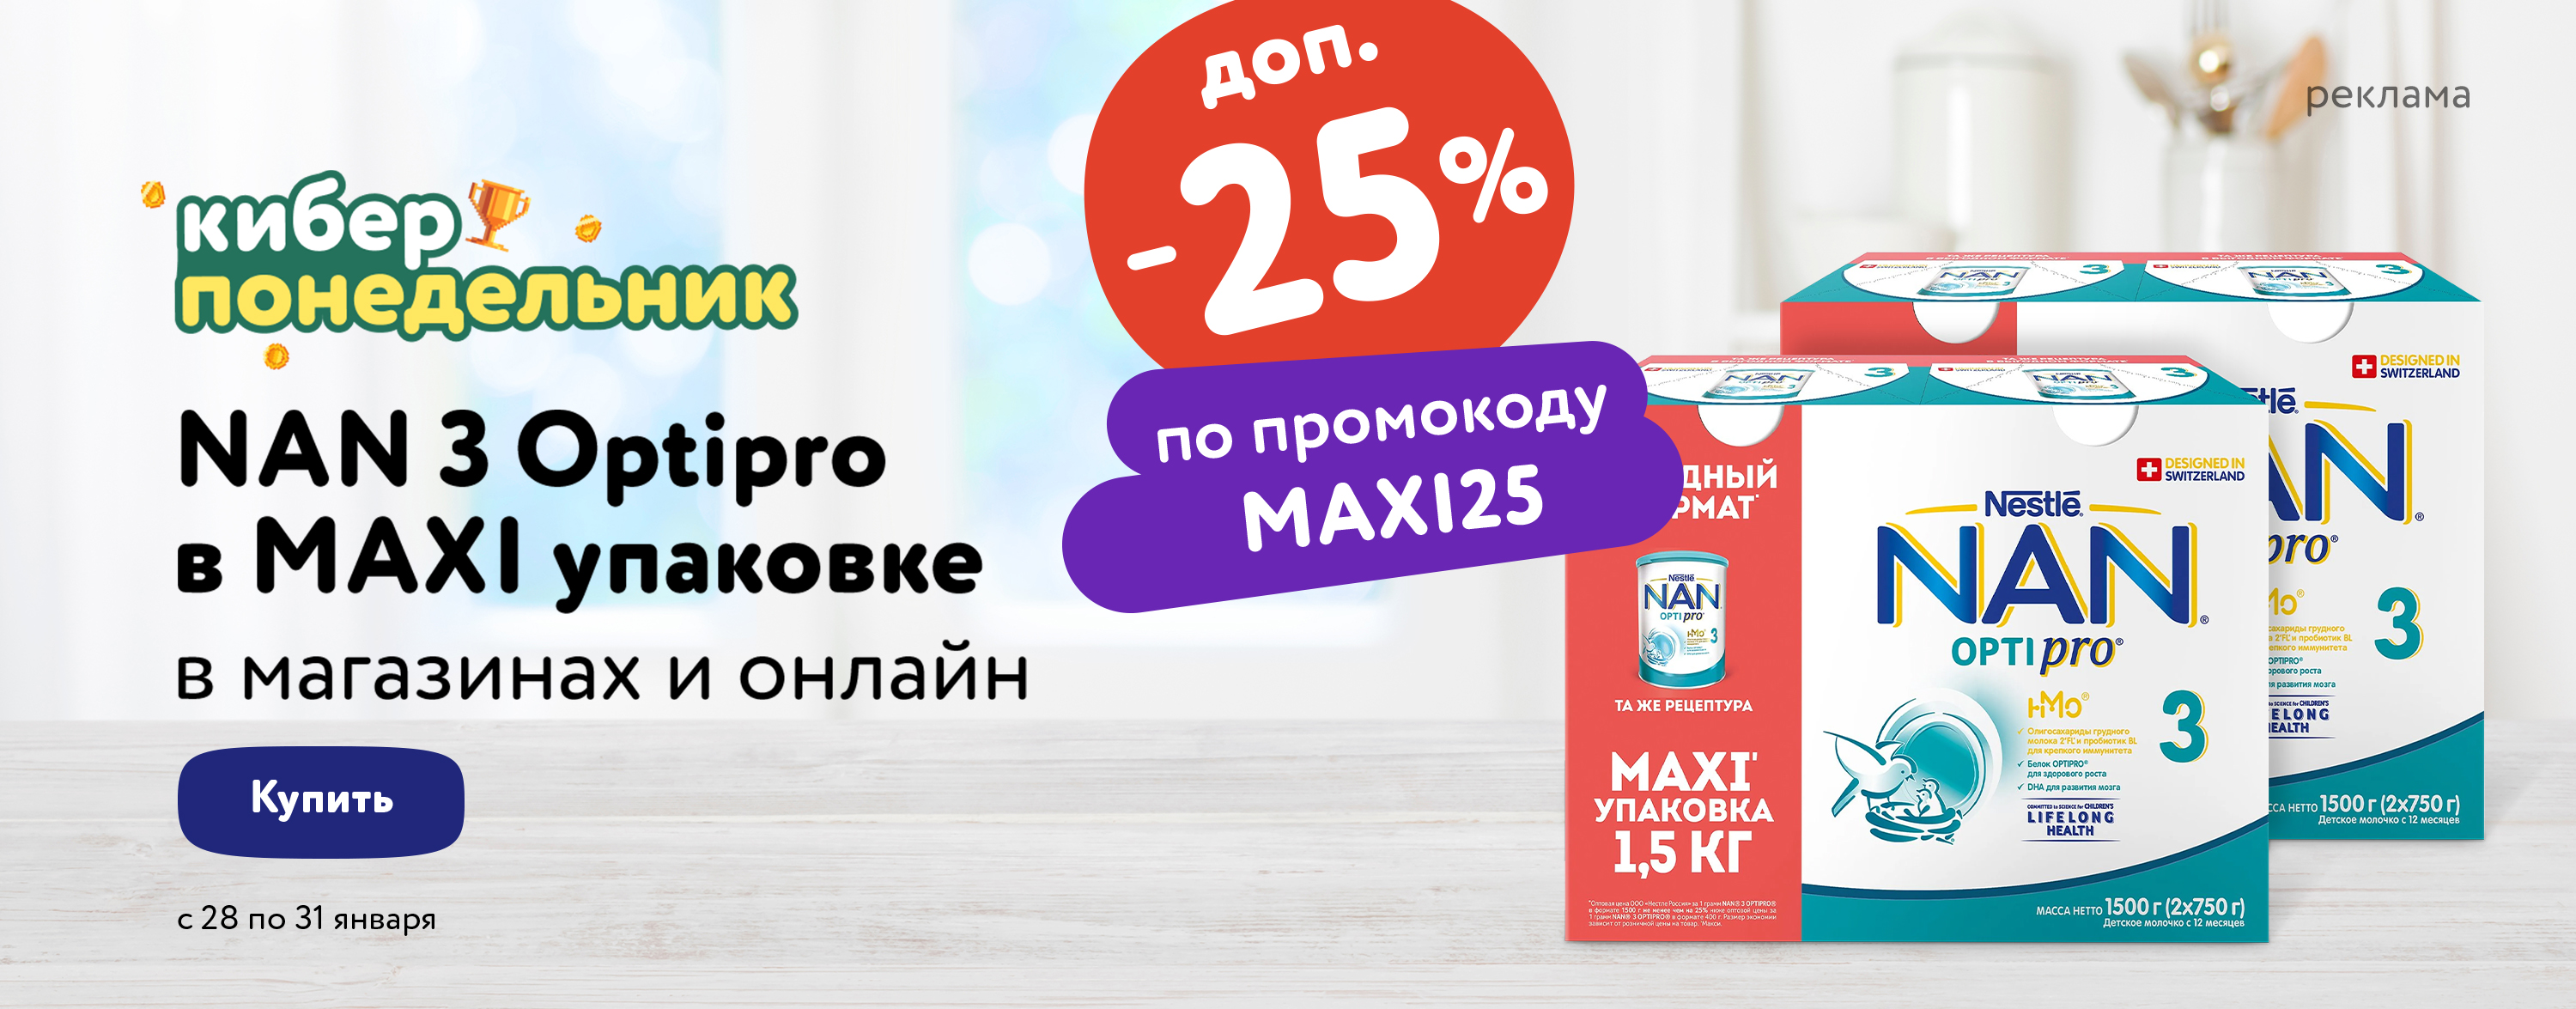 Доп. скидка 25 % на молочко NAN 3 Optipro в MAXI упаковке по промокоду статика